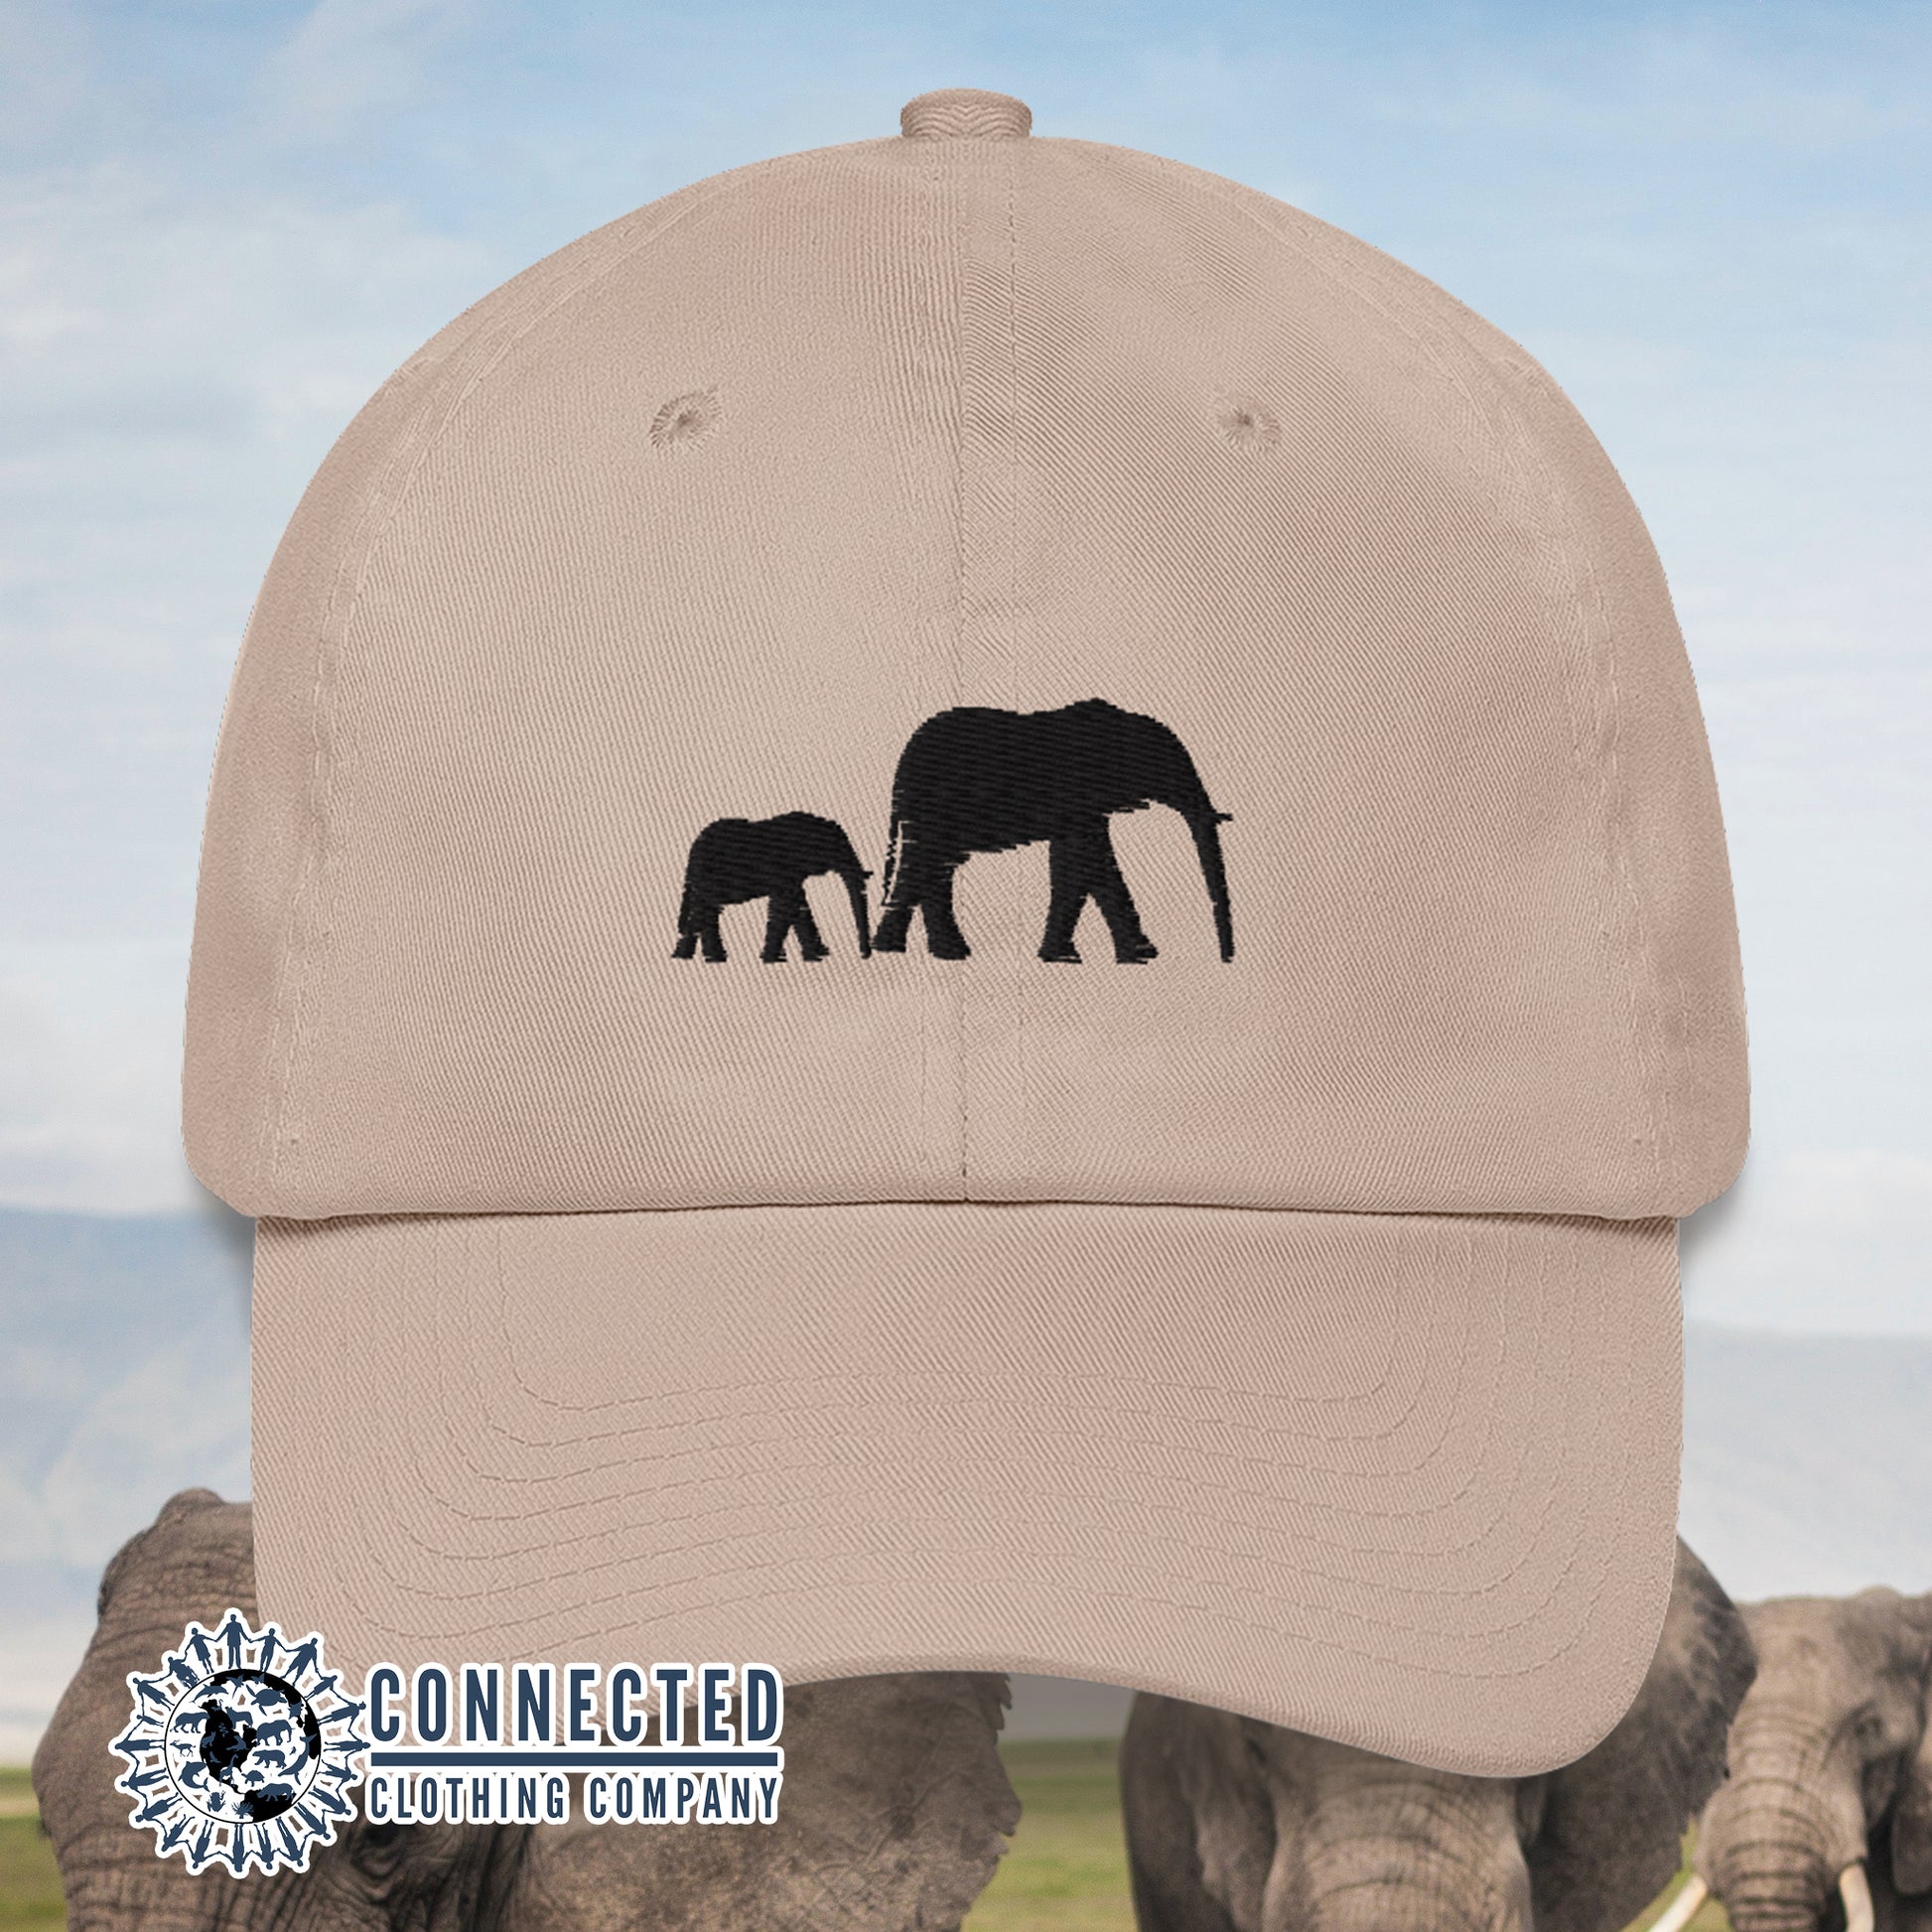 Stone Elephant Eco Friendly Cotton Cap - Connected Clothing Company - 10% of profits donated to elephant conservation